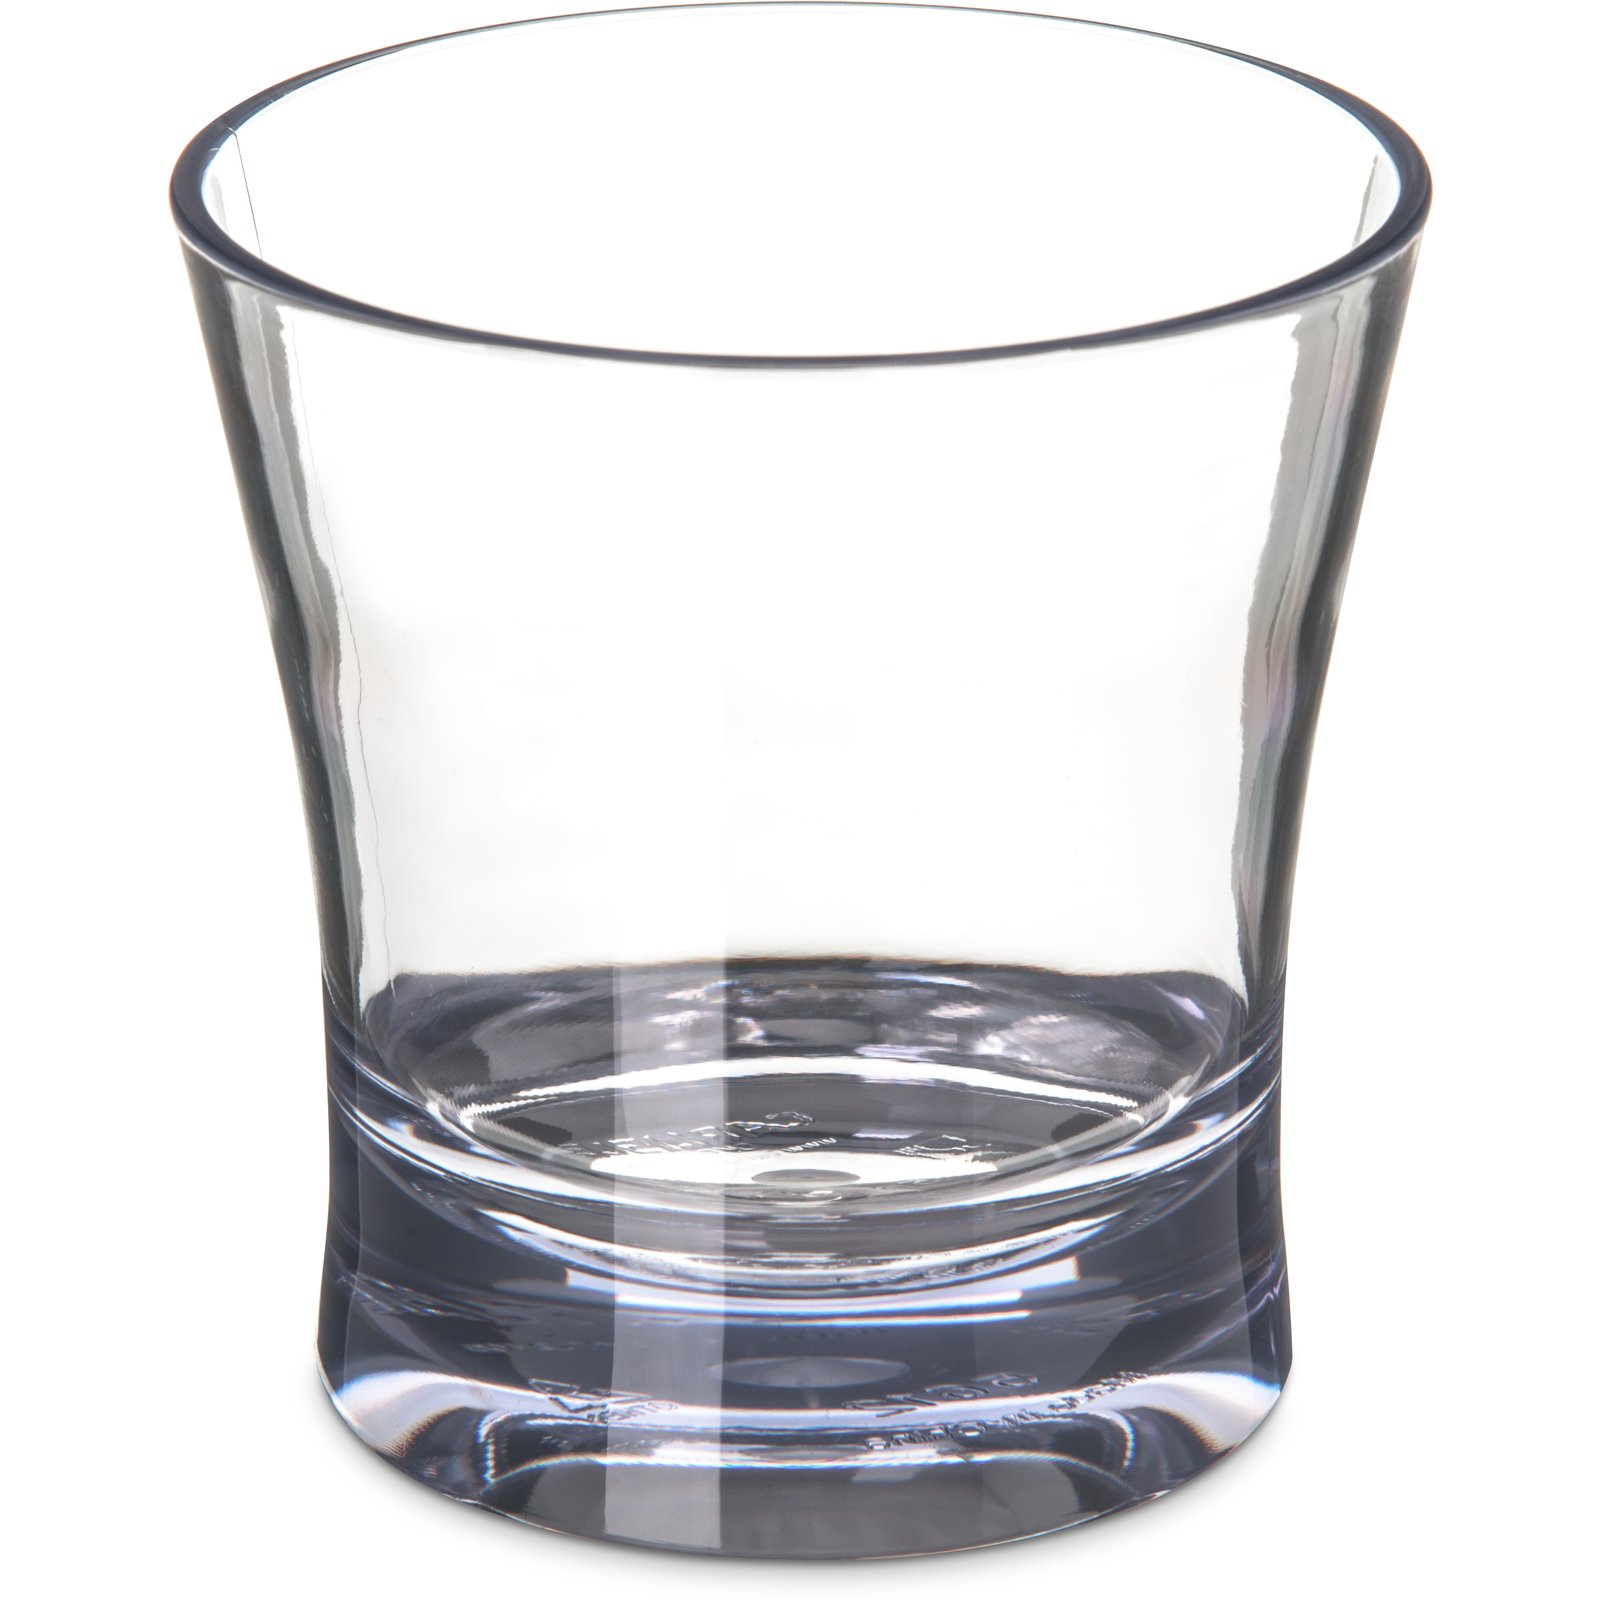 ALIBI 12oz DOUBLE OLD FASHIONED CLEAR PLASTIC GLASS 